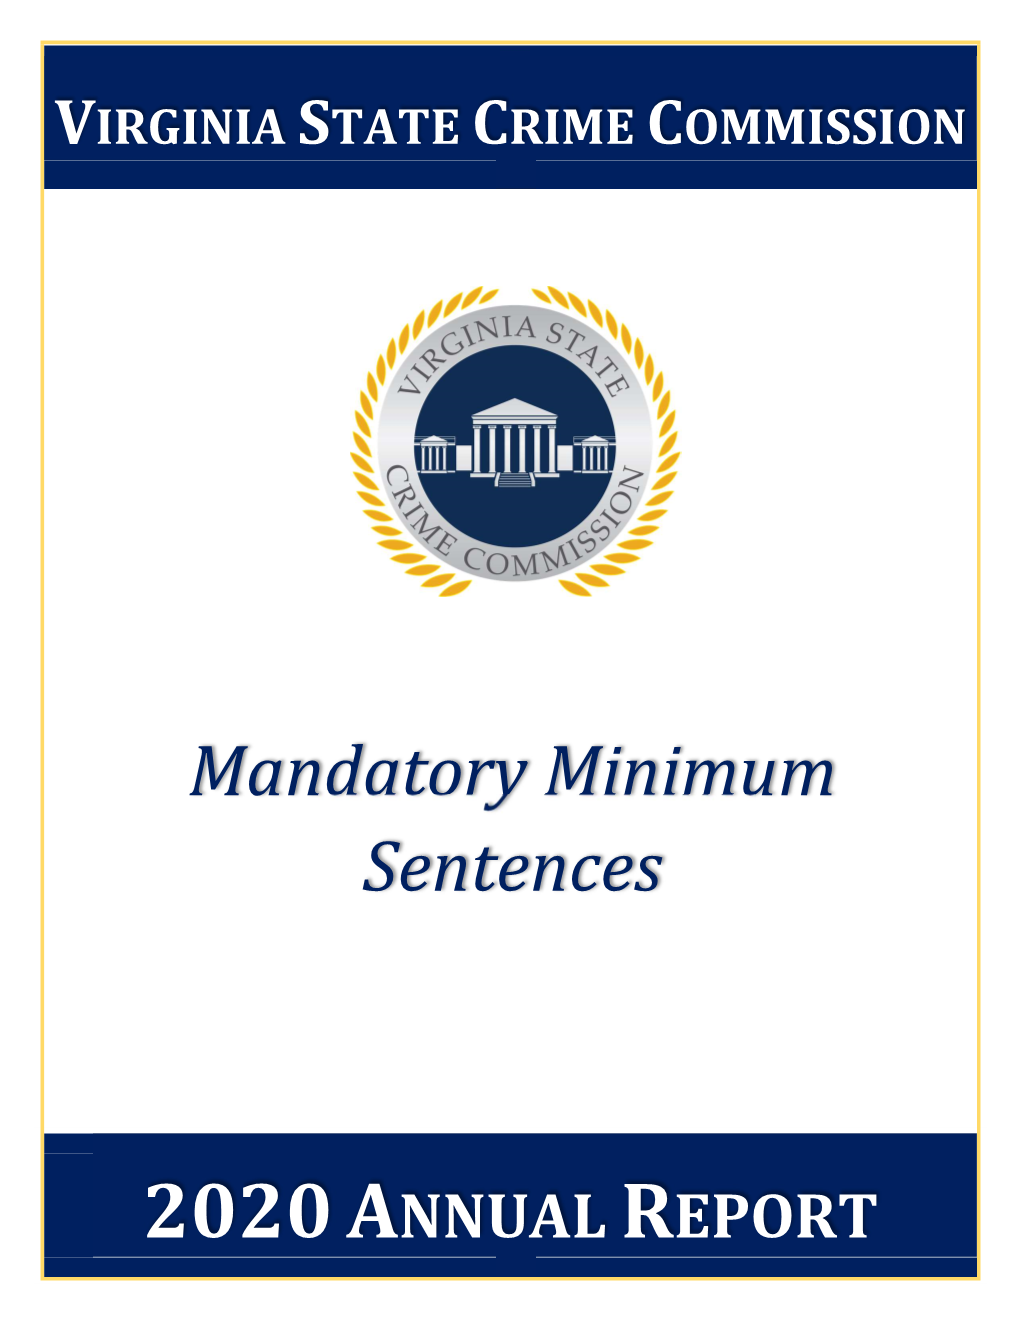 Annual Report: Mandatory Minimum Sentences